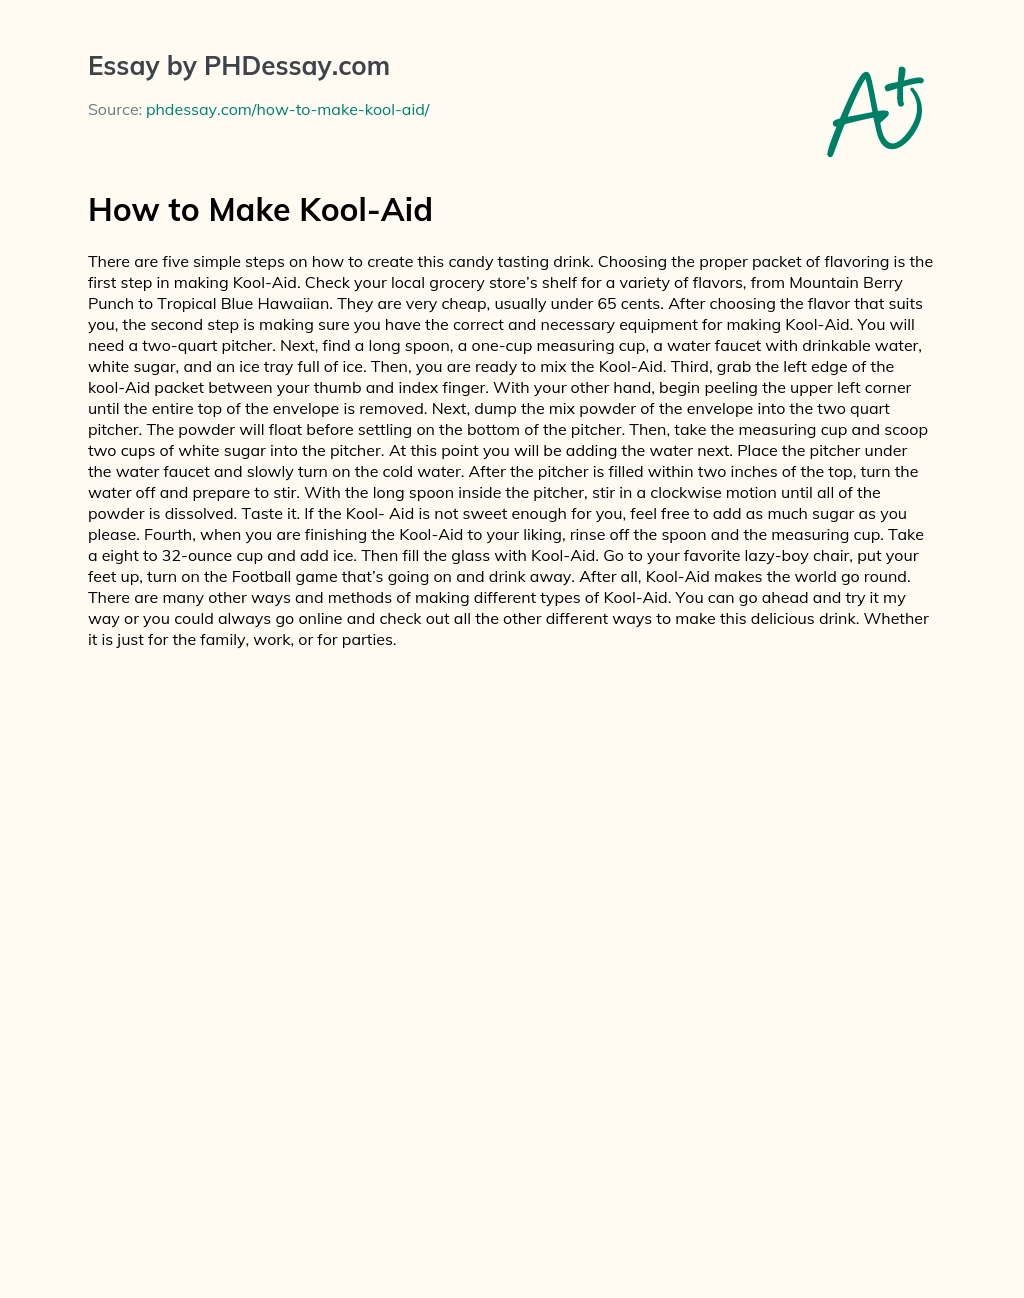 How to Make Kool-Aid essay